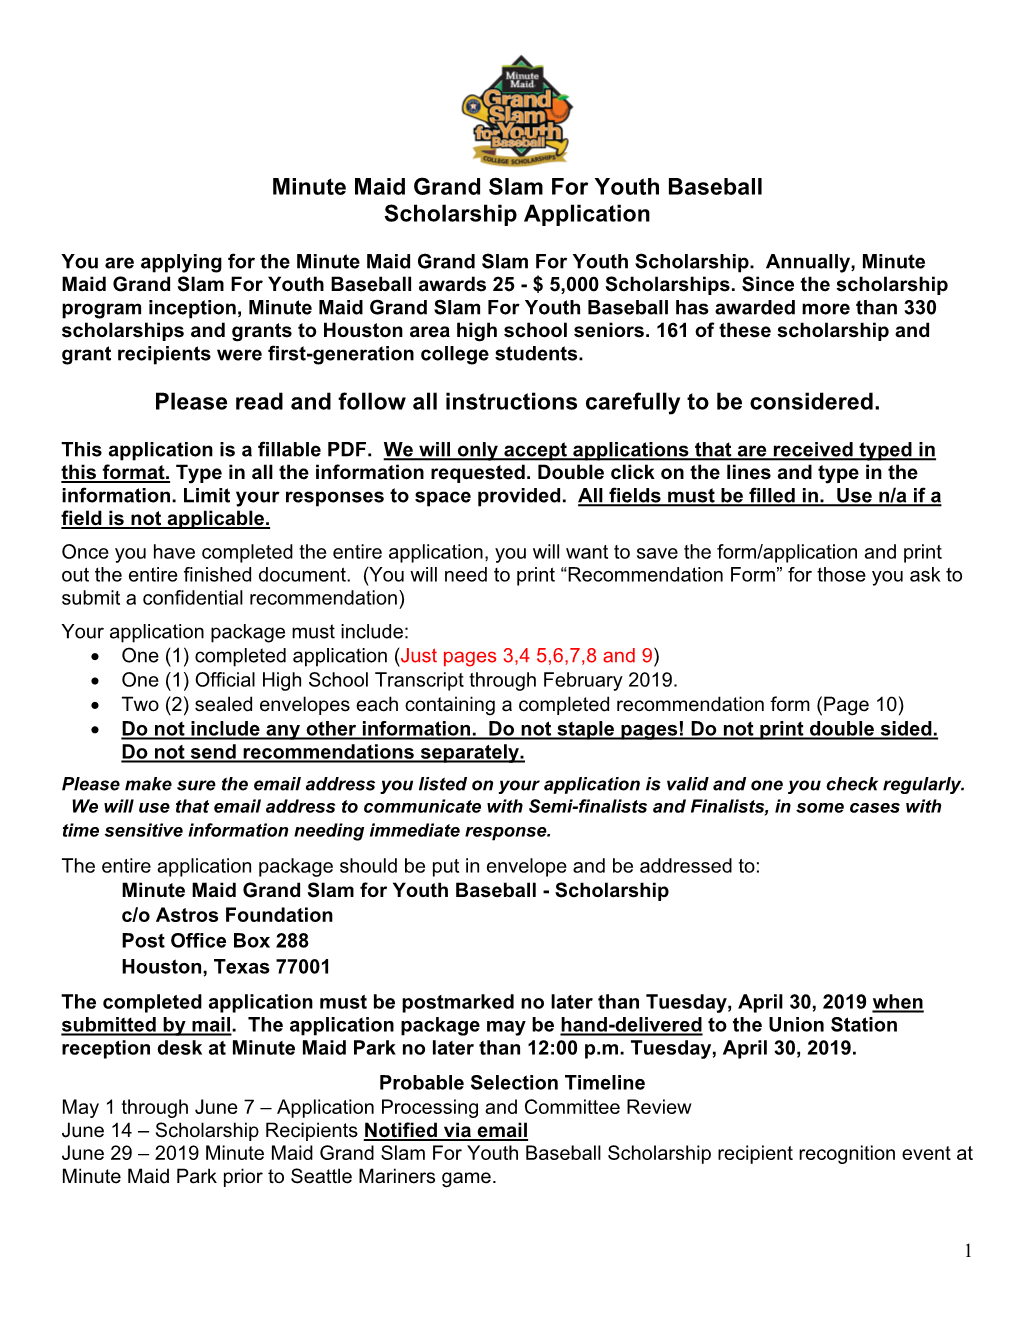 Minute Maid Grand Slam for Youth Baseball Scholarship Application